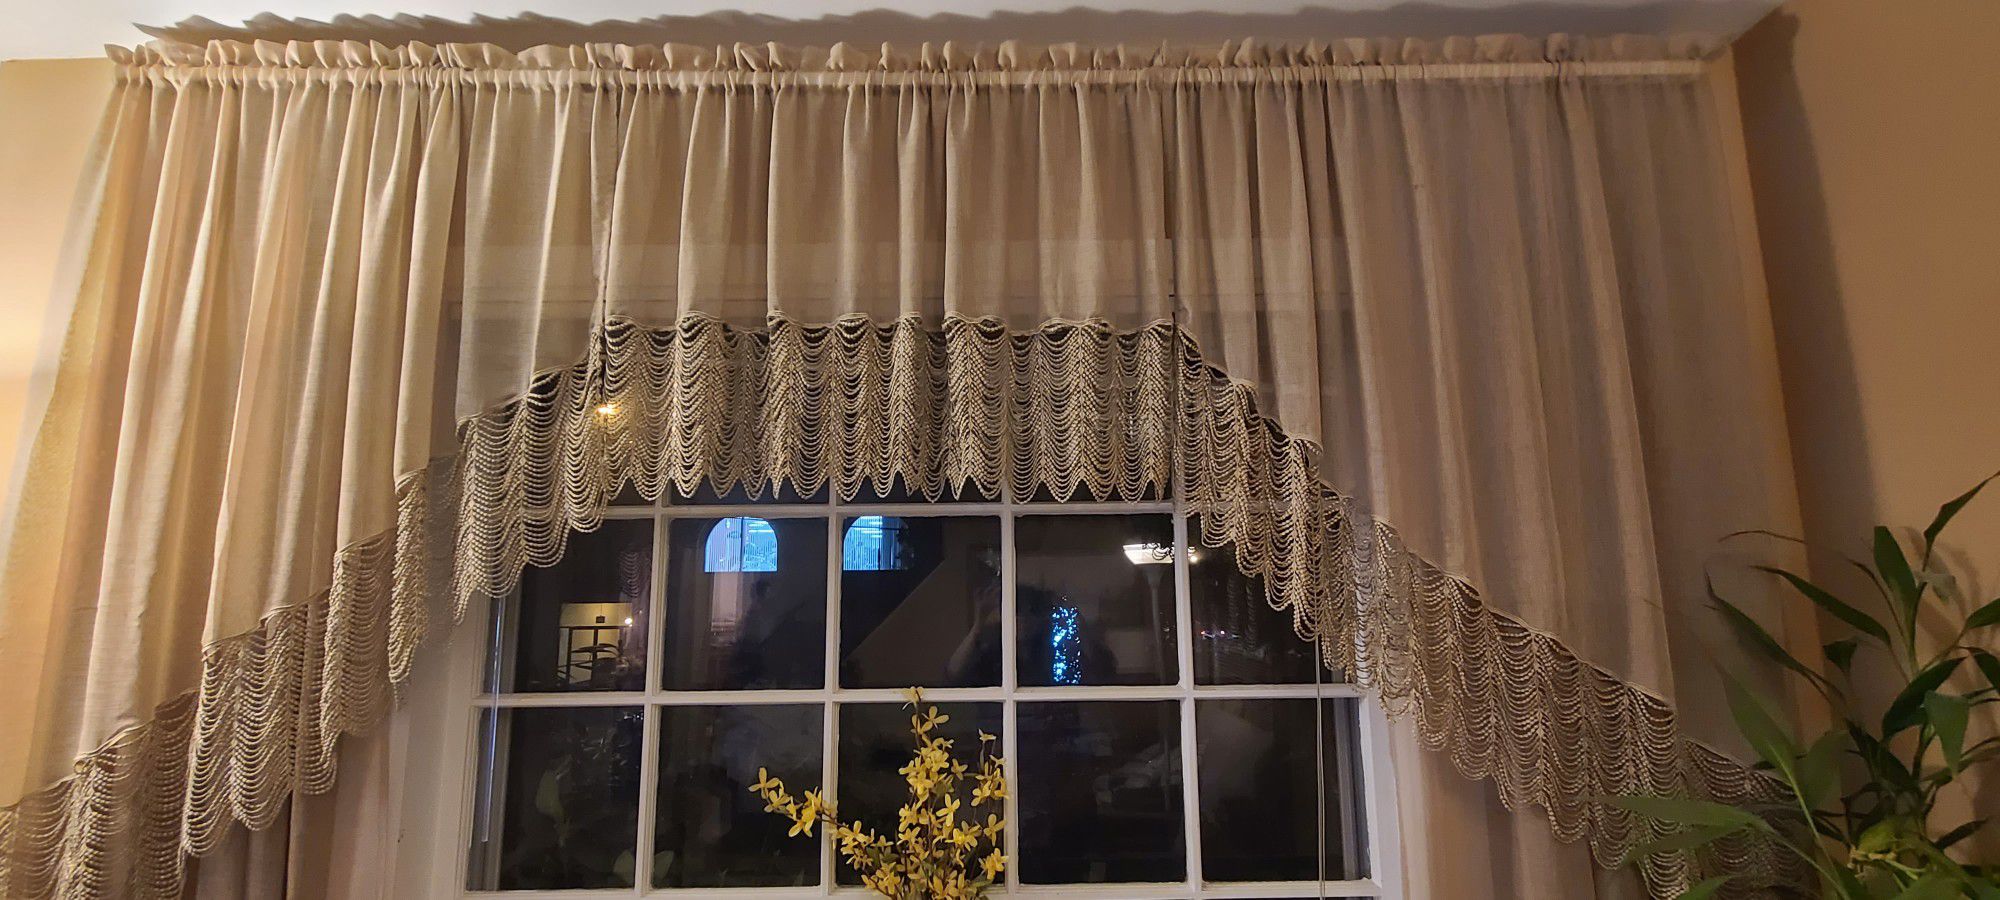 Curtains chiffon and lace